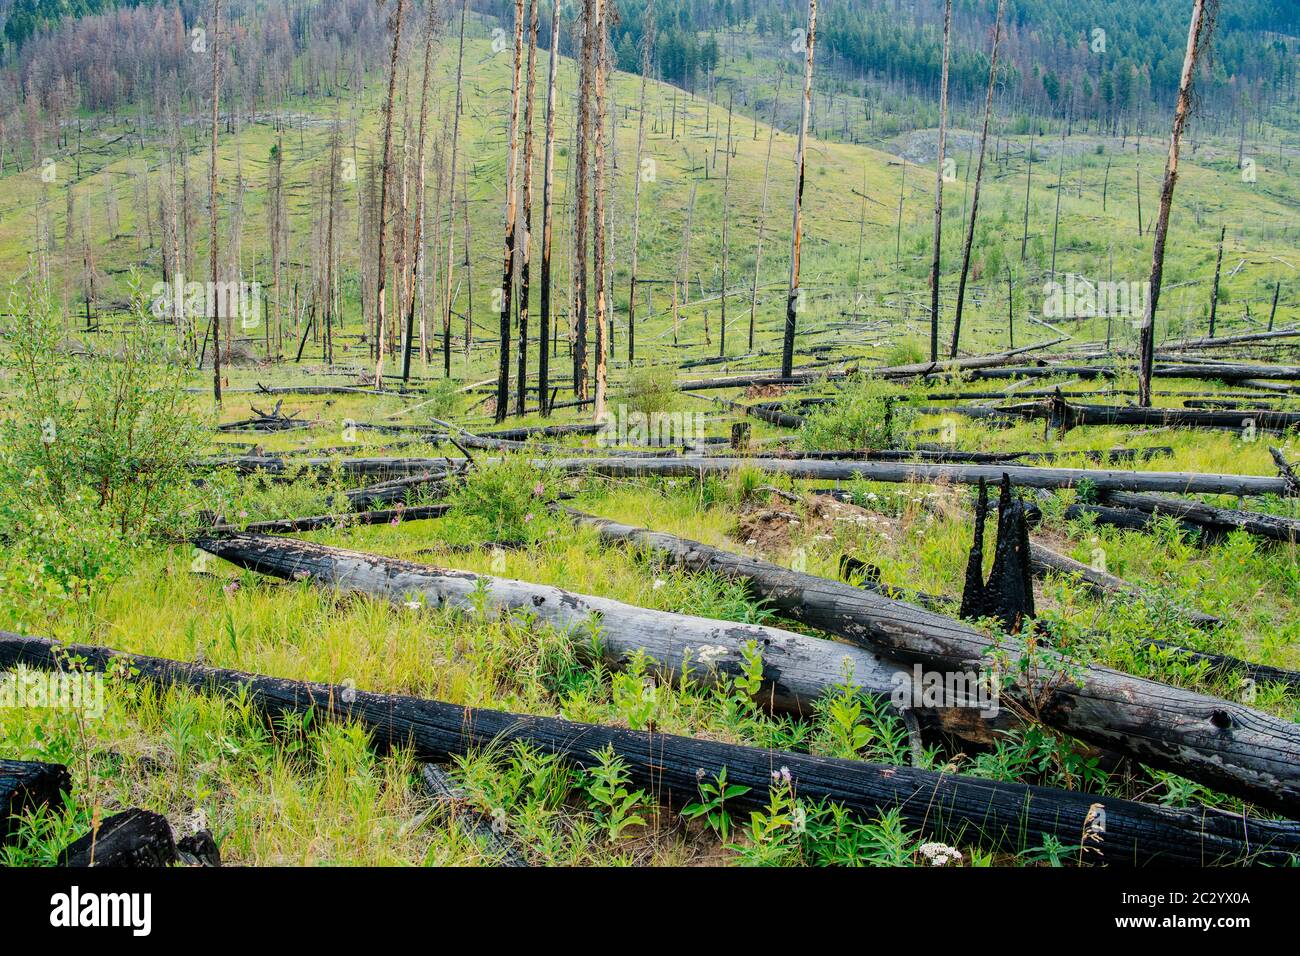 Forest damaged by acid rain, Banff, Alberta, Canada Stock Photo